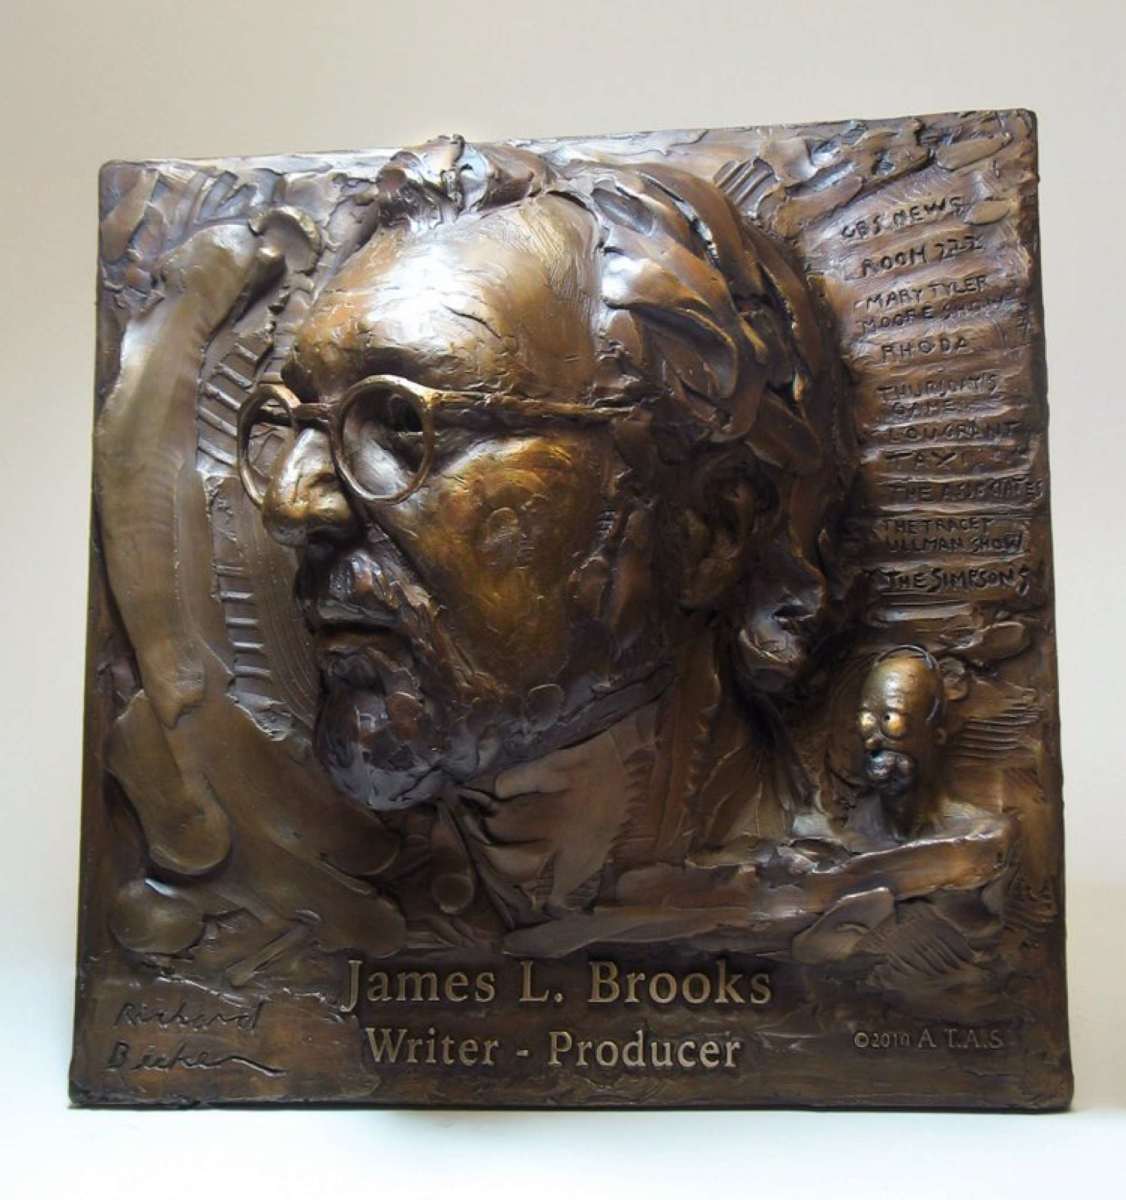 James L. Brooks for Emmys Hall of Fame by Richard Becker 